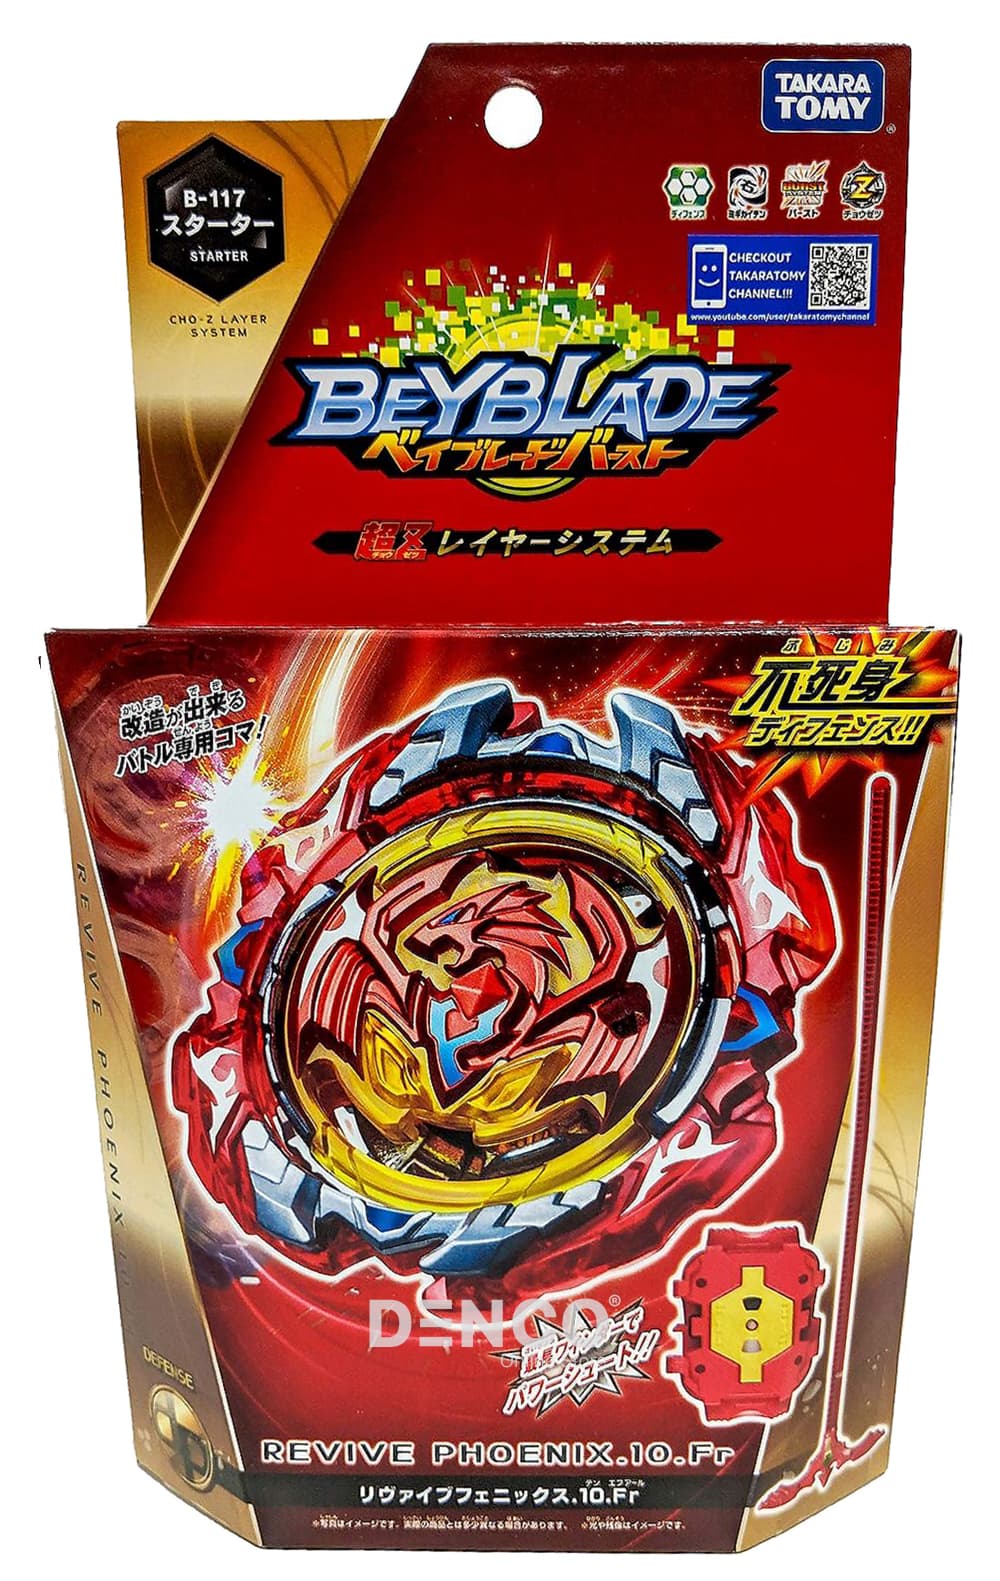 Волчок BEYBLADE Burst Revive Phoenix 10. Fr. (Возрождающий Феникс) B-117 от Takara Tomy с Запускателем